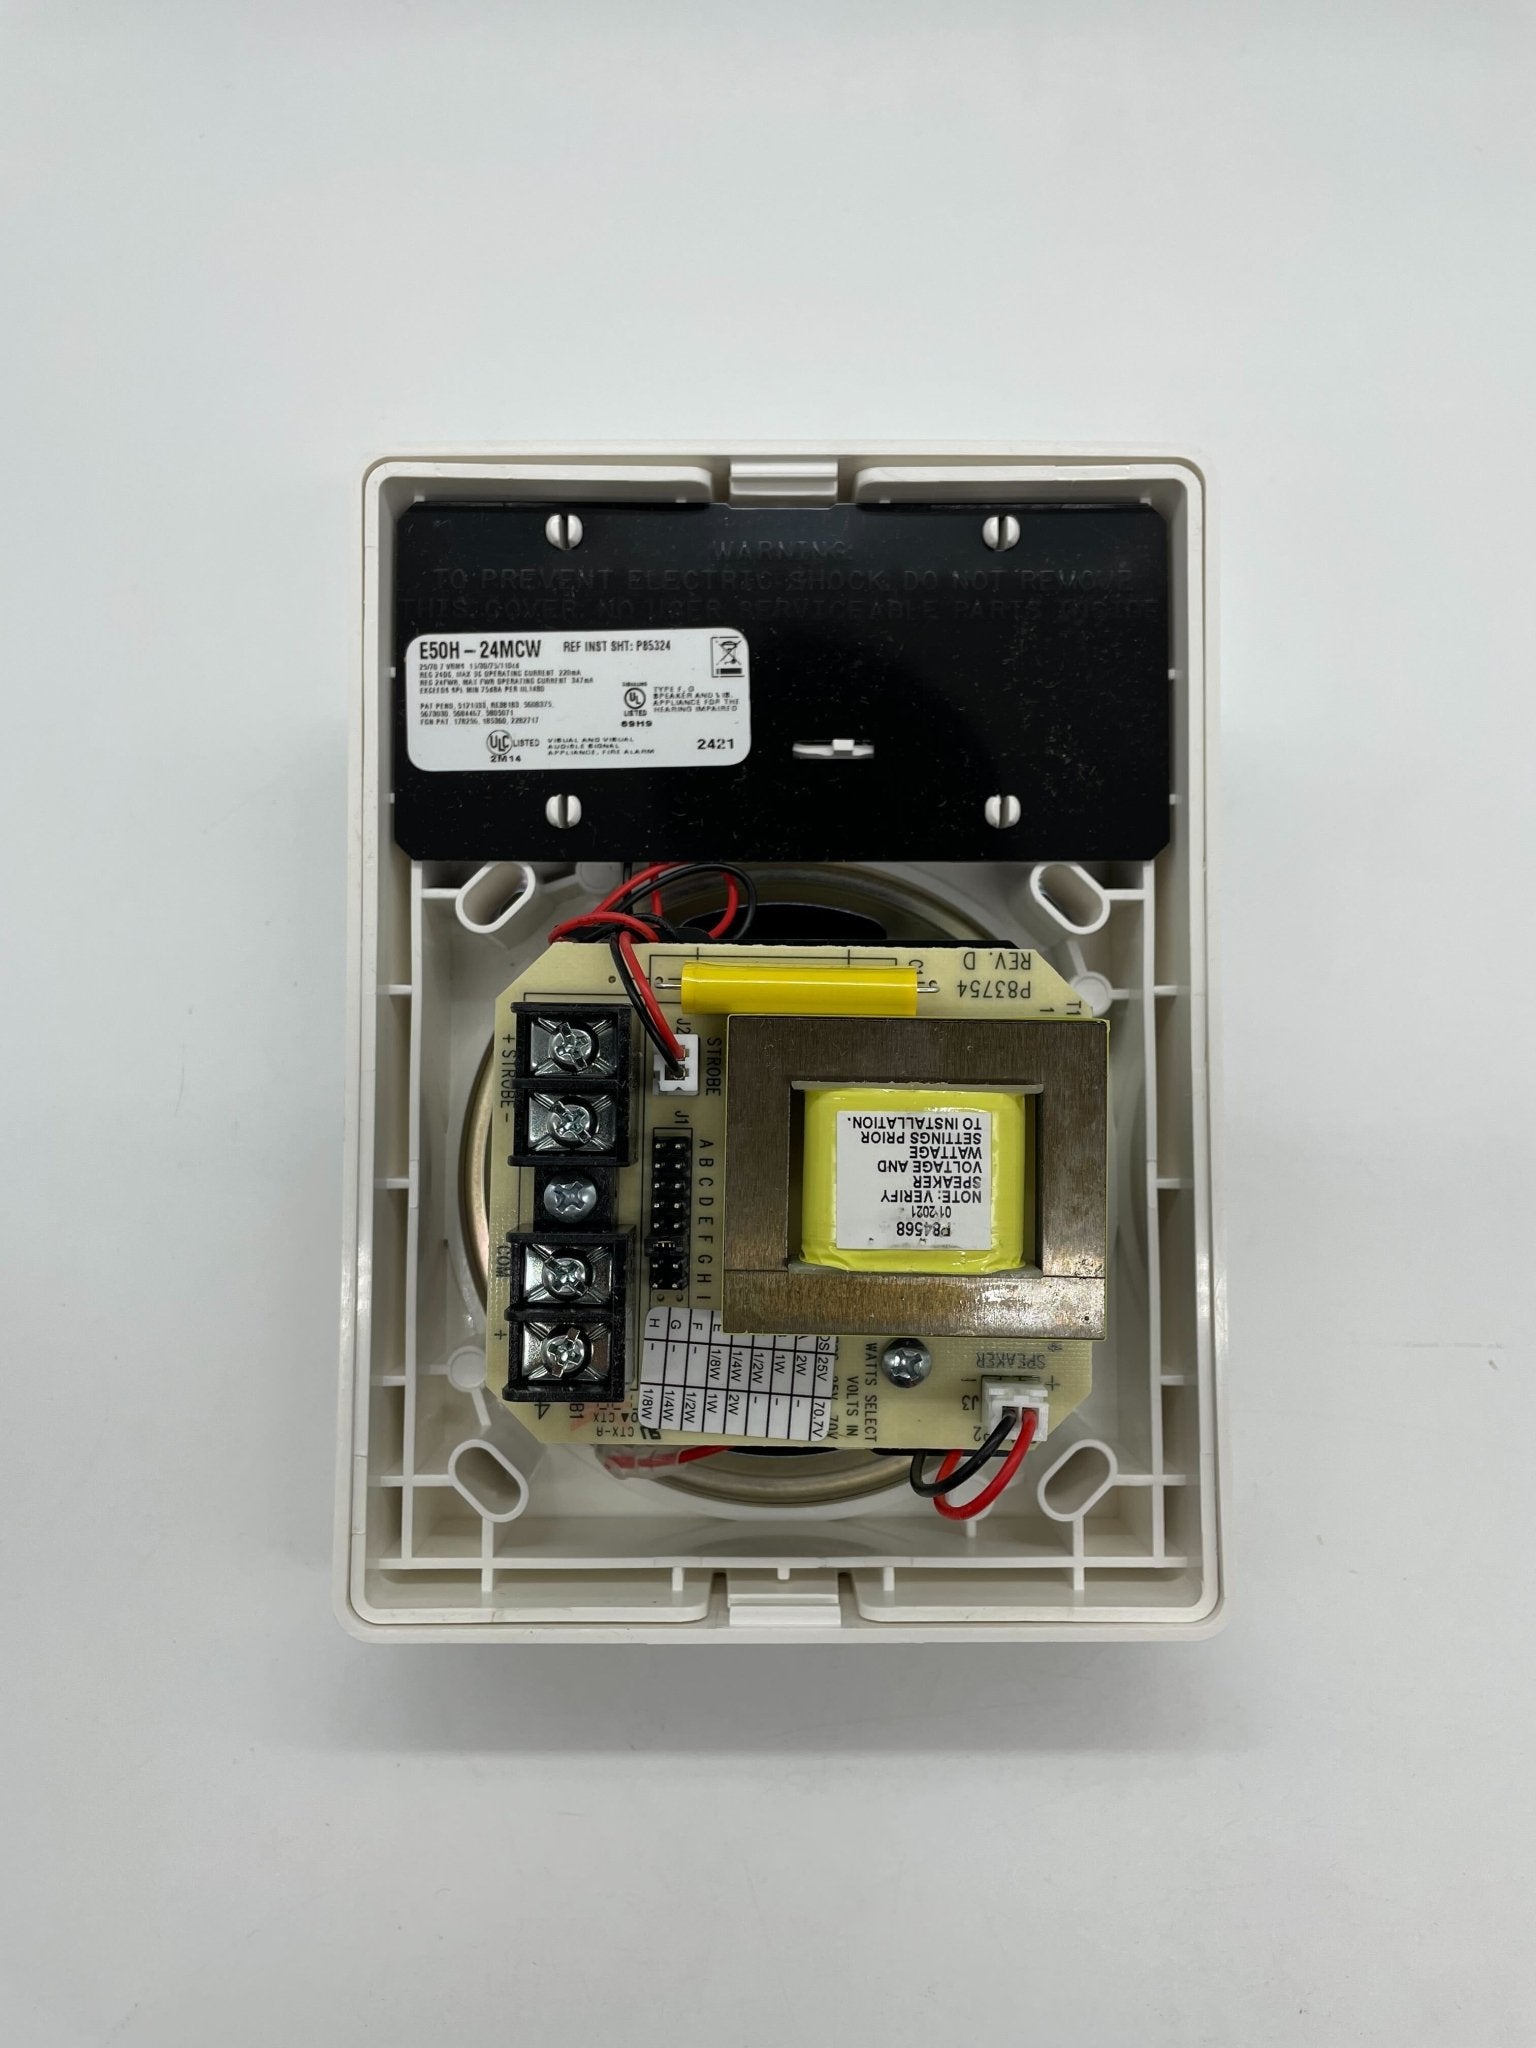 Wheelock E50H-24MCW-FW - The Fire Alarm Supplier